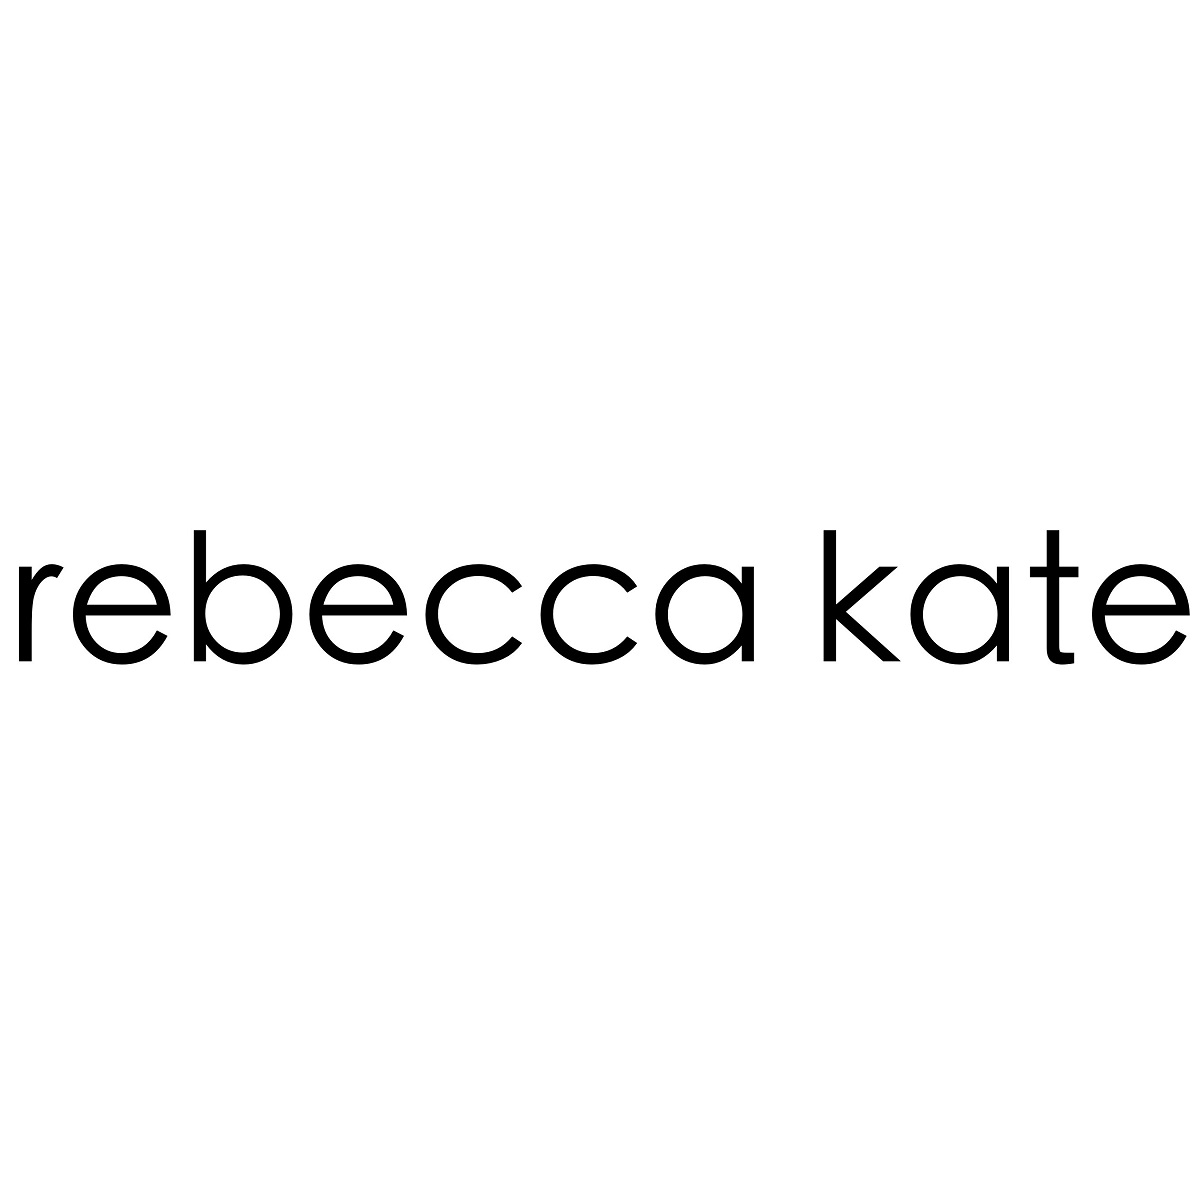 Rebecca Kate Artworks